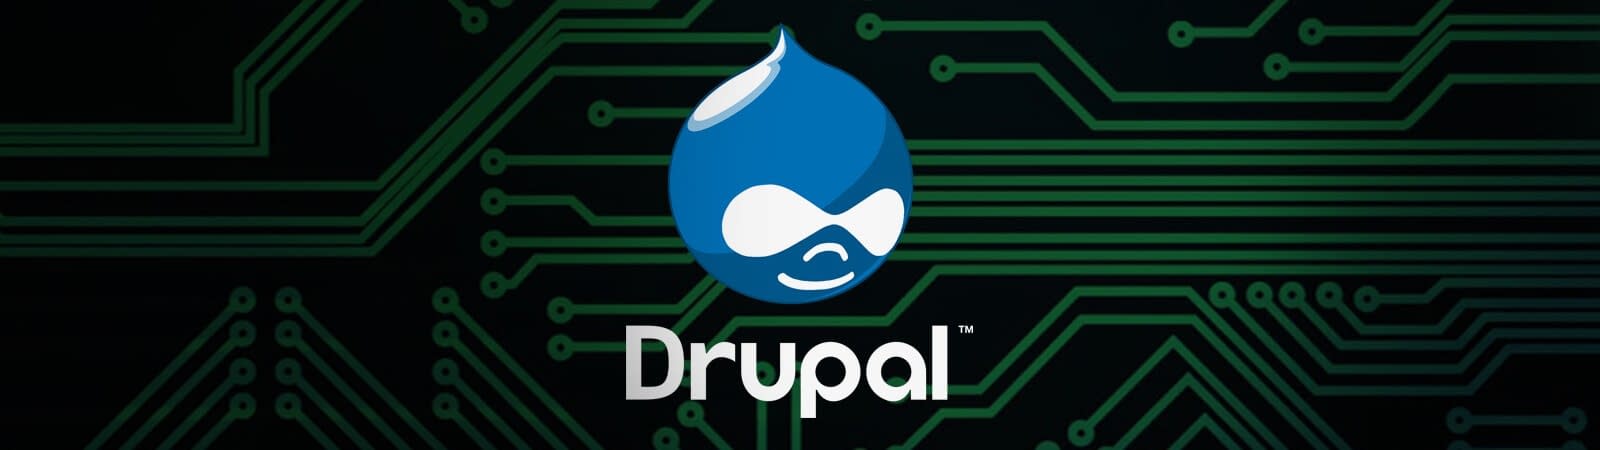 drupal developer course